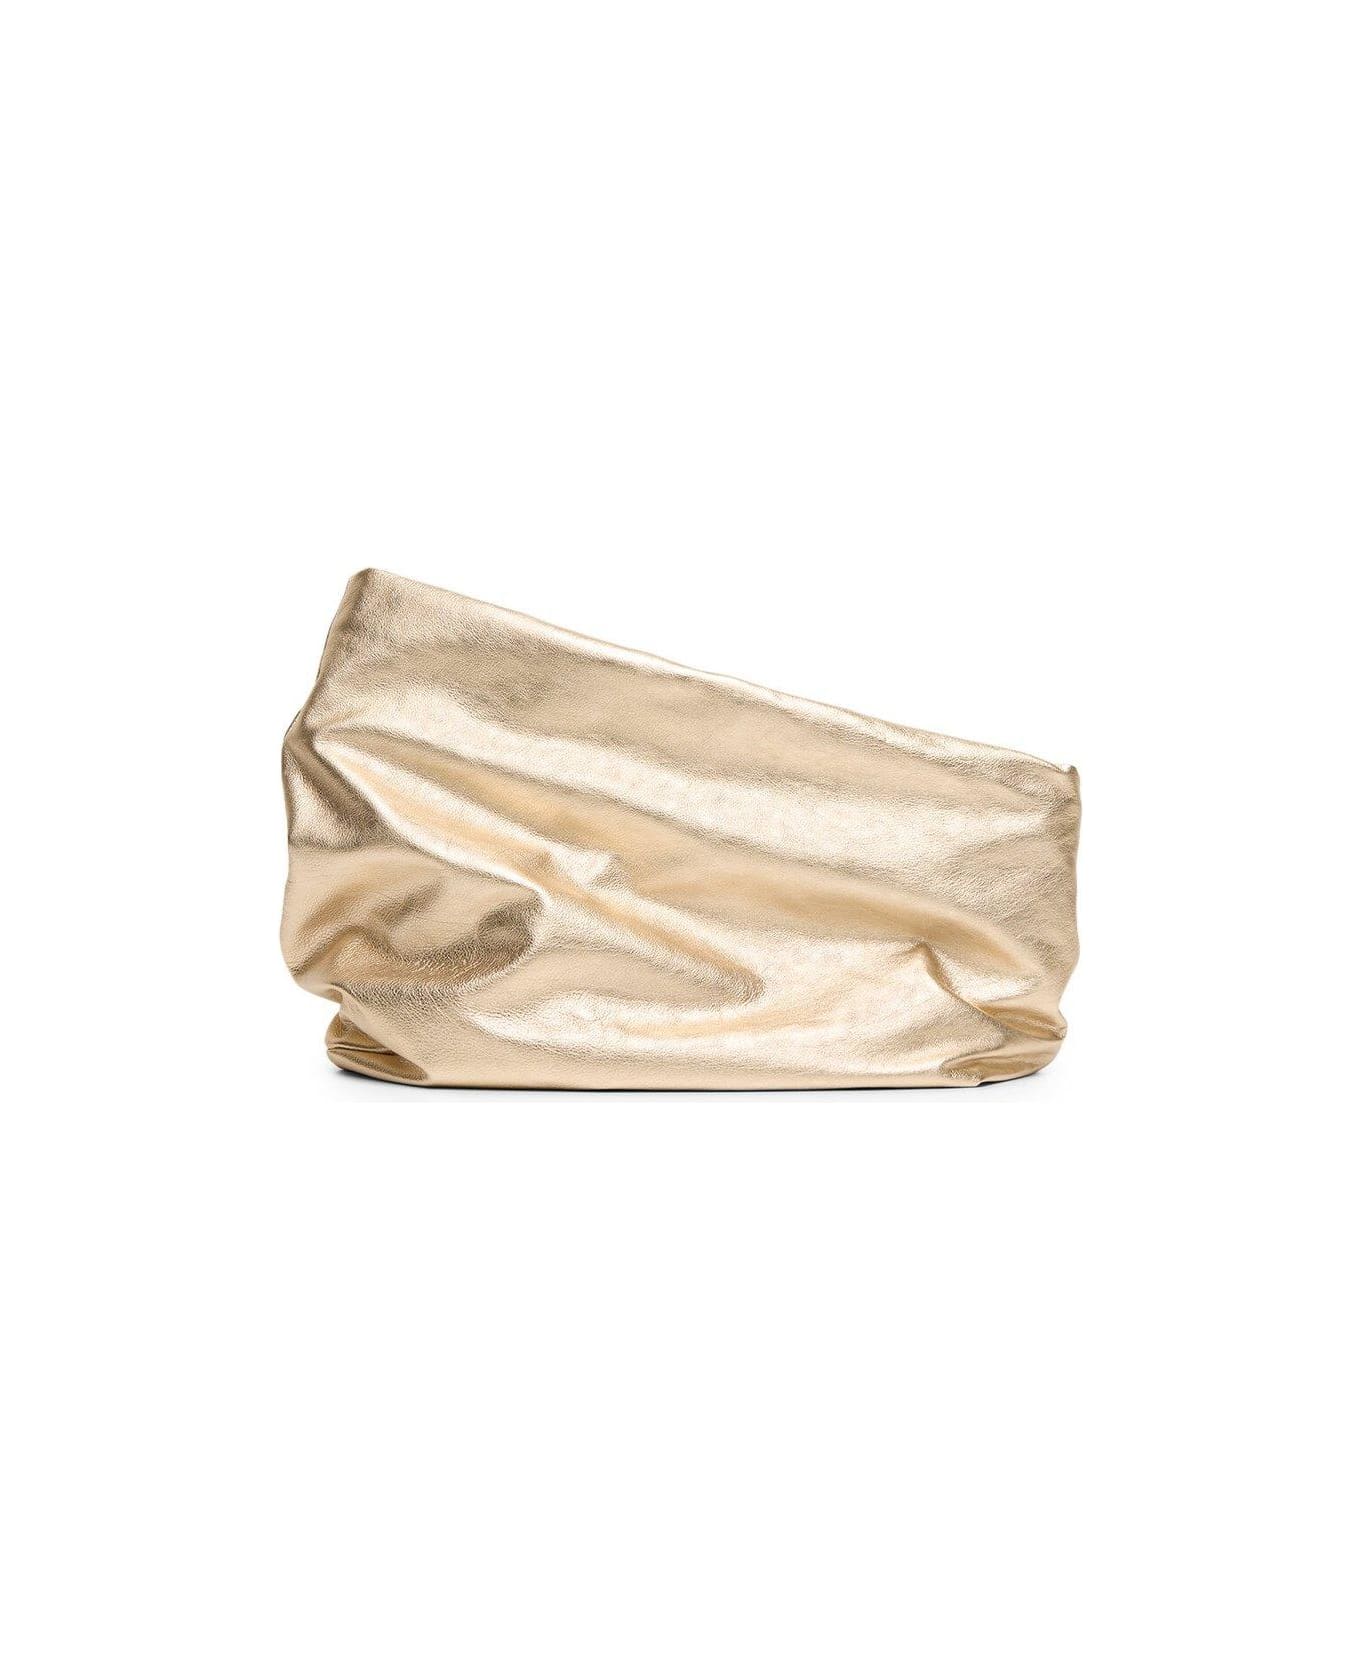 Marsell Fanta Shoulder Bag - Gold クラッチバッグ